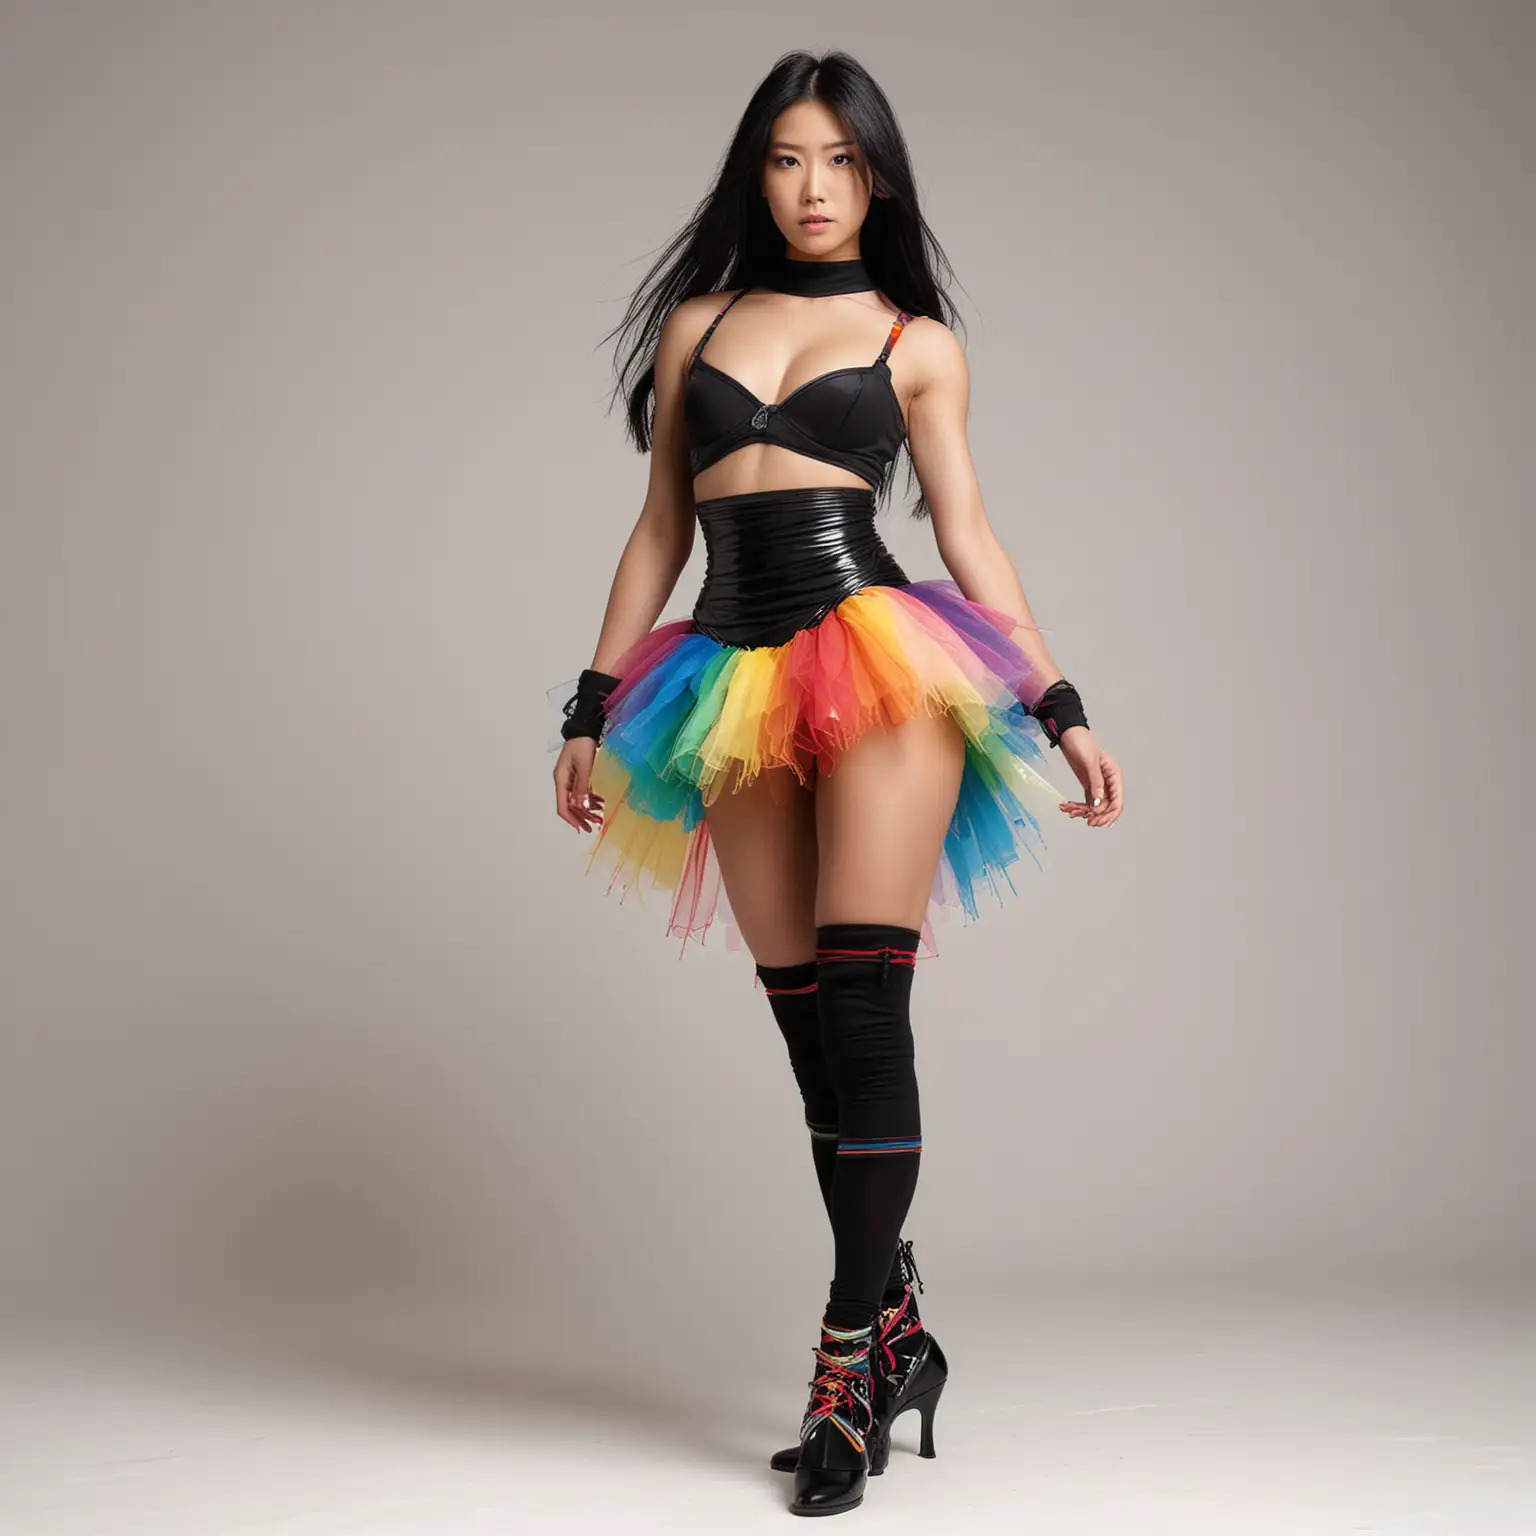 Japanese Supermodel in Metal Samurai Armor and Rainbow Ballerina Tutu